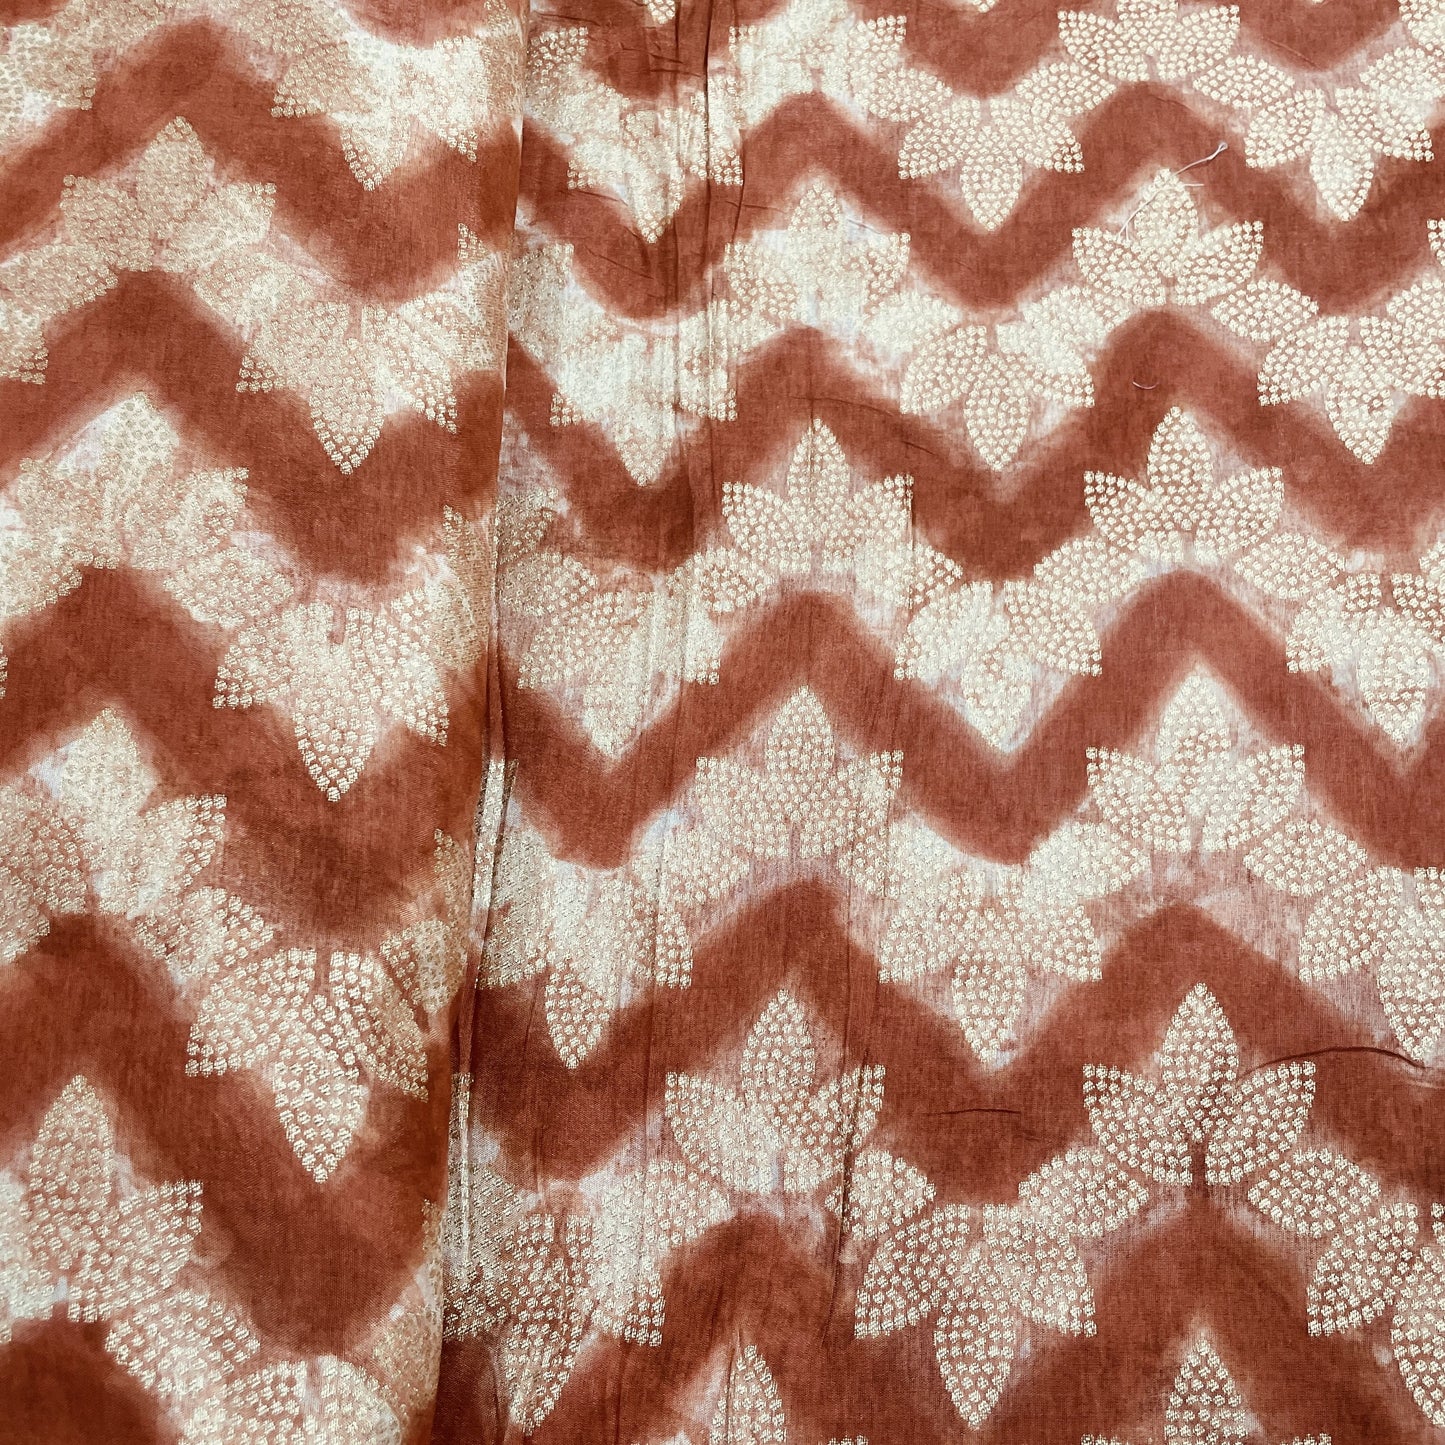 Red Chevron Dola Silk Jacquard Fabric